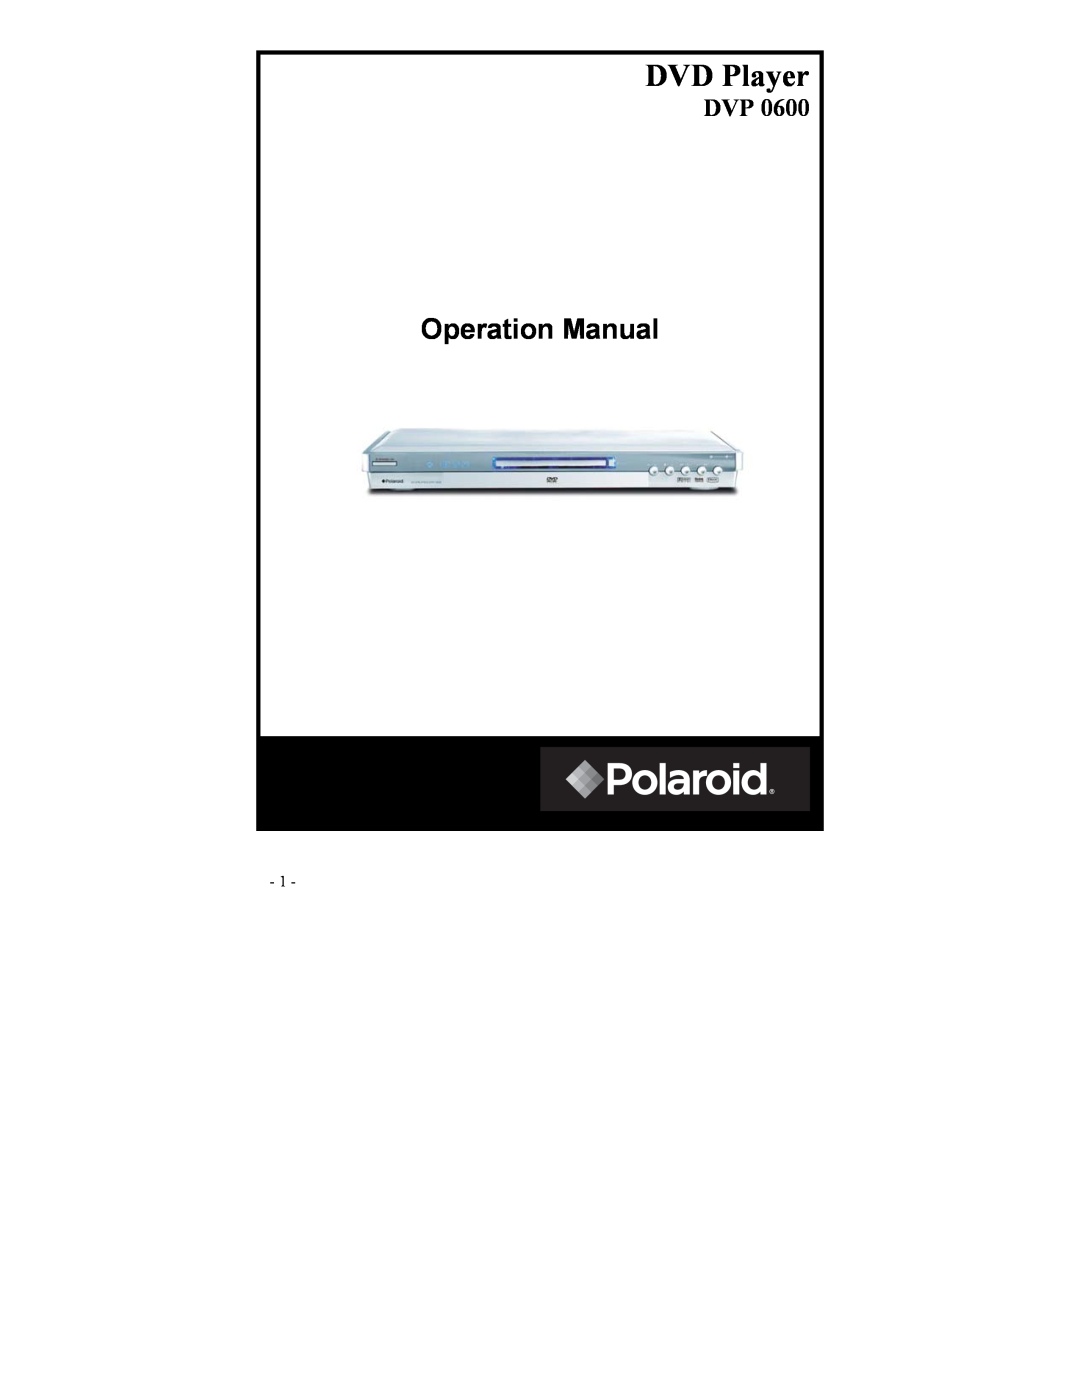 Polaroid DVP-0600 operation manual DVD Player, Operation Manual 